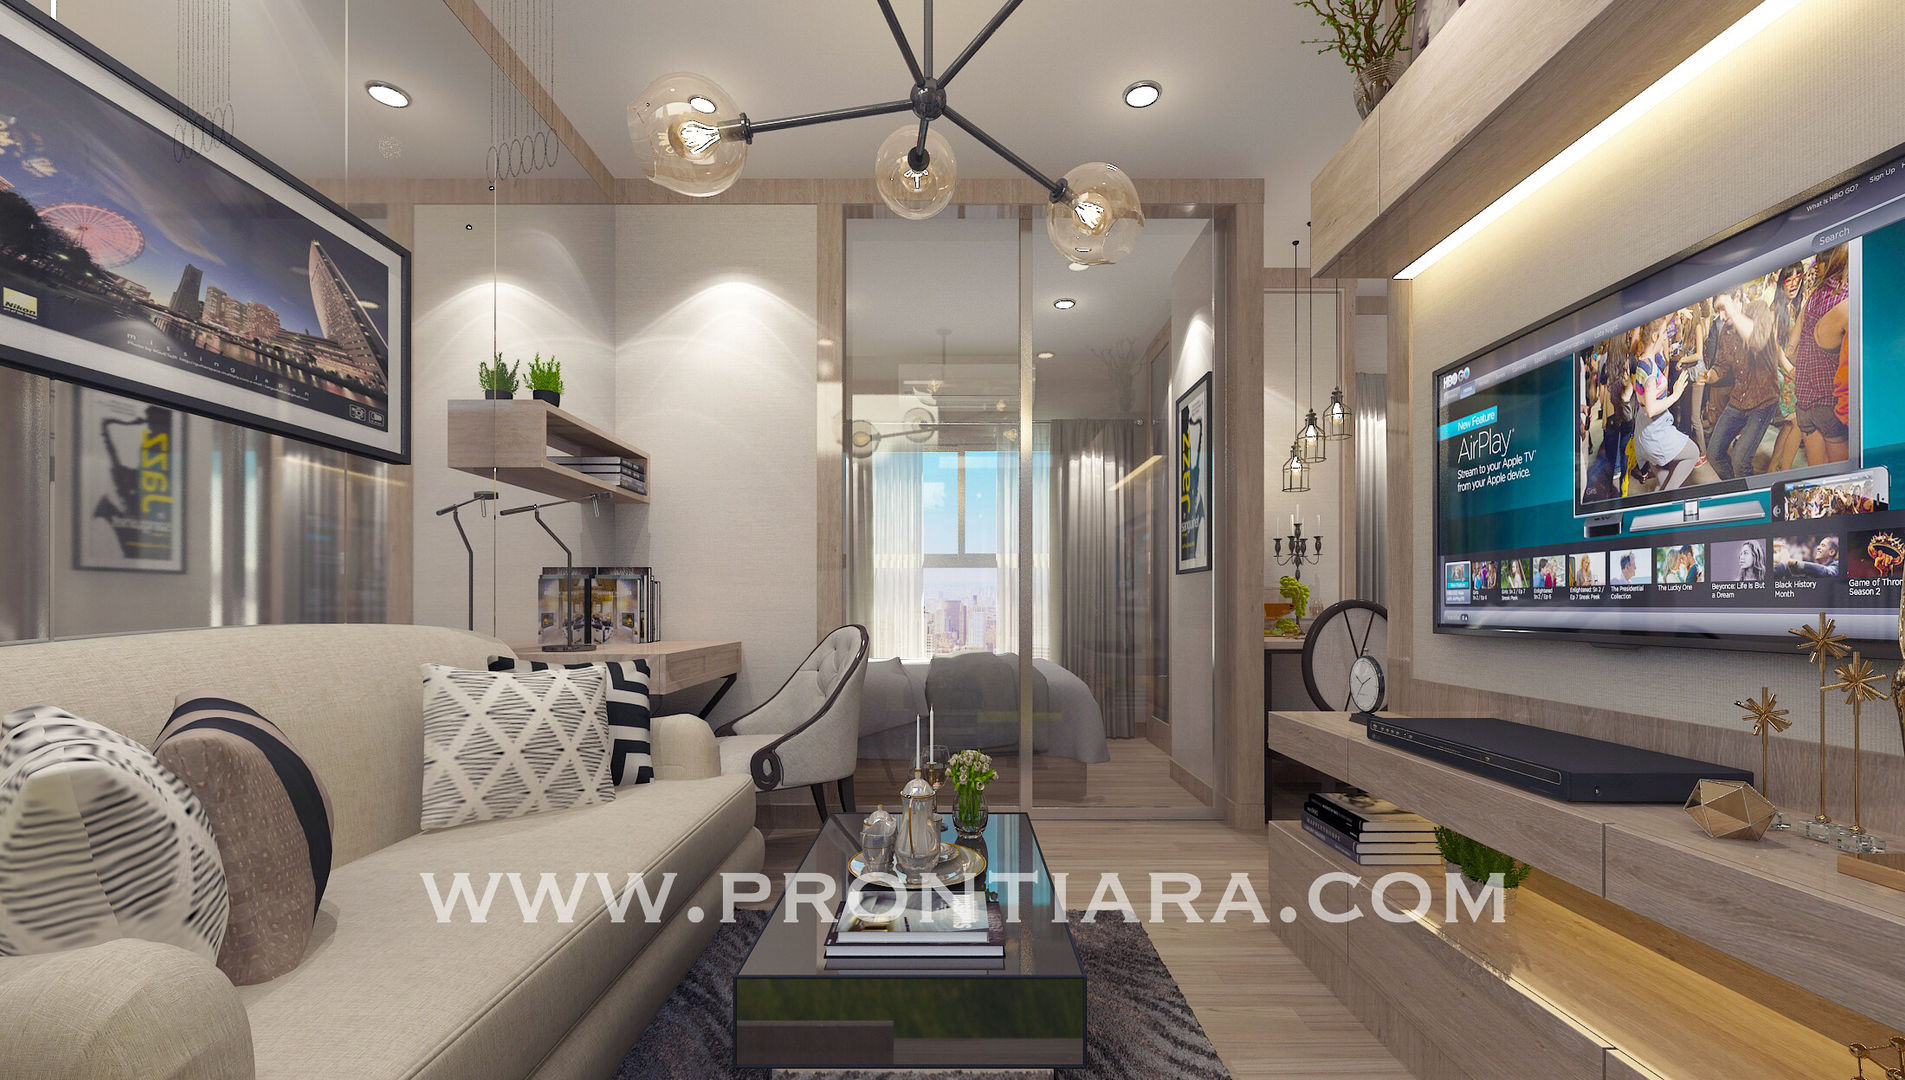 Plum condo 22.5 start 150,000฿ ออกแบบและตกแต่งภายใน, Prontiara Prontiara Modern Study Room and Home Office